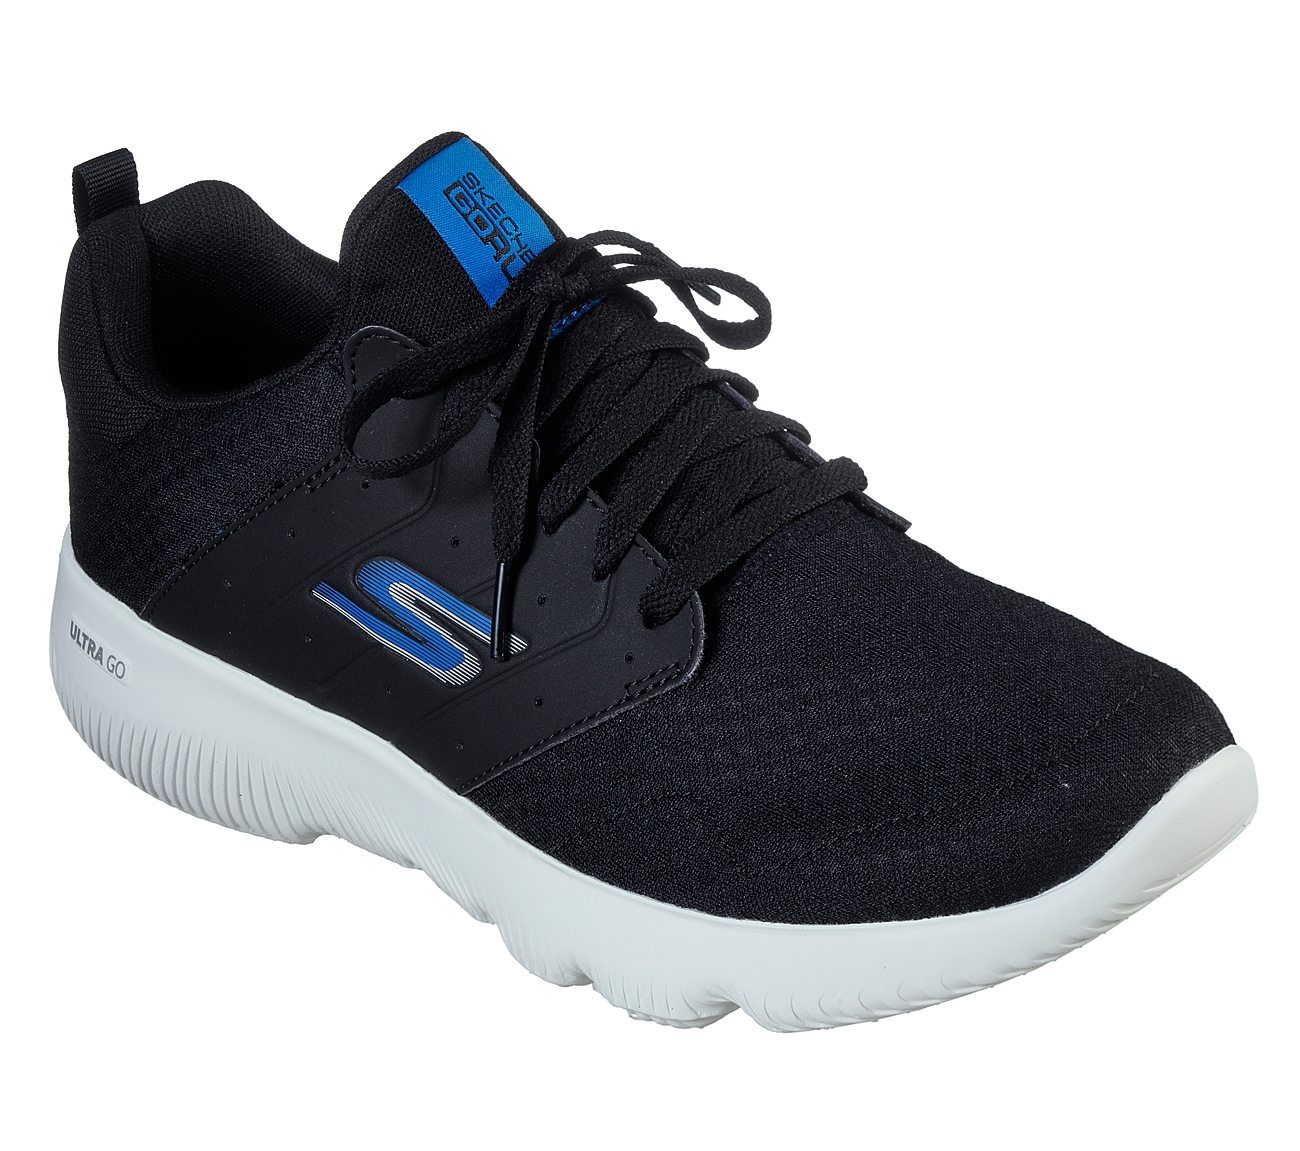 GO RUN FOCUS-LIMIT, BLACK/BLUE Footwear Lateral View